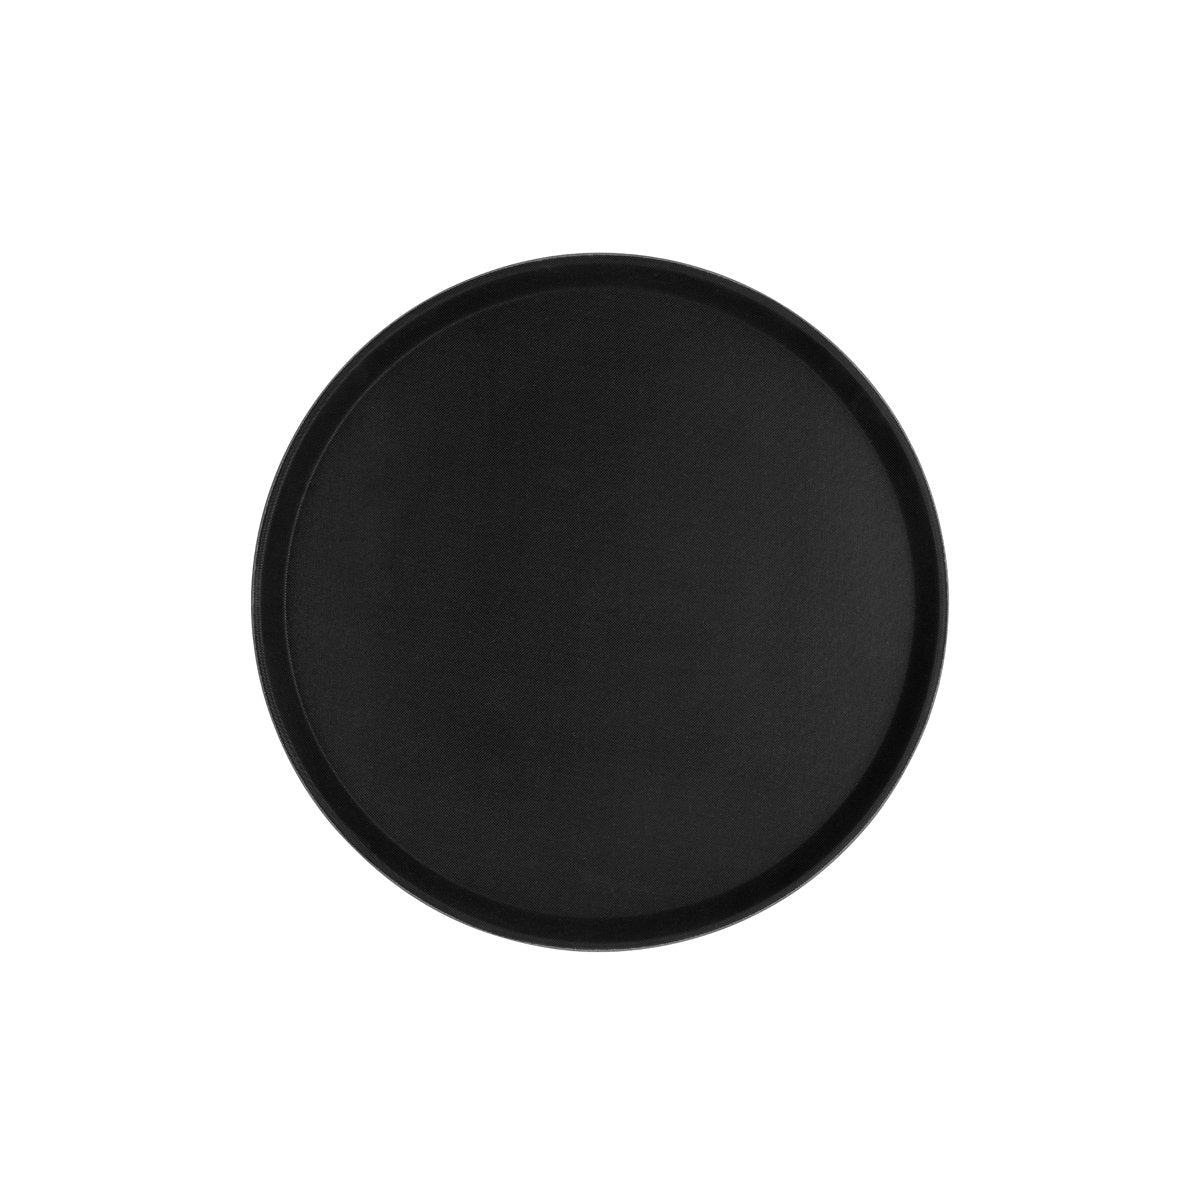 04296 Chef Inox Round Tray Non-Slip Fibreglass Black 400mm Tomkin Australia Hospitality Supplies